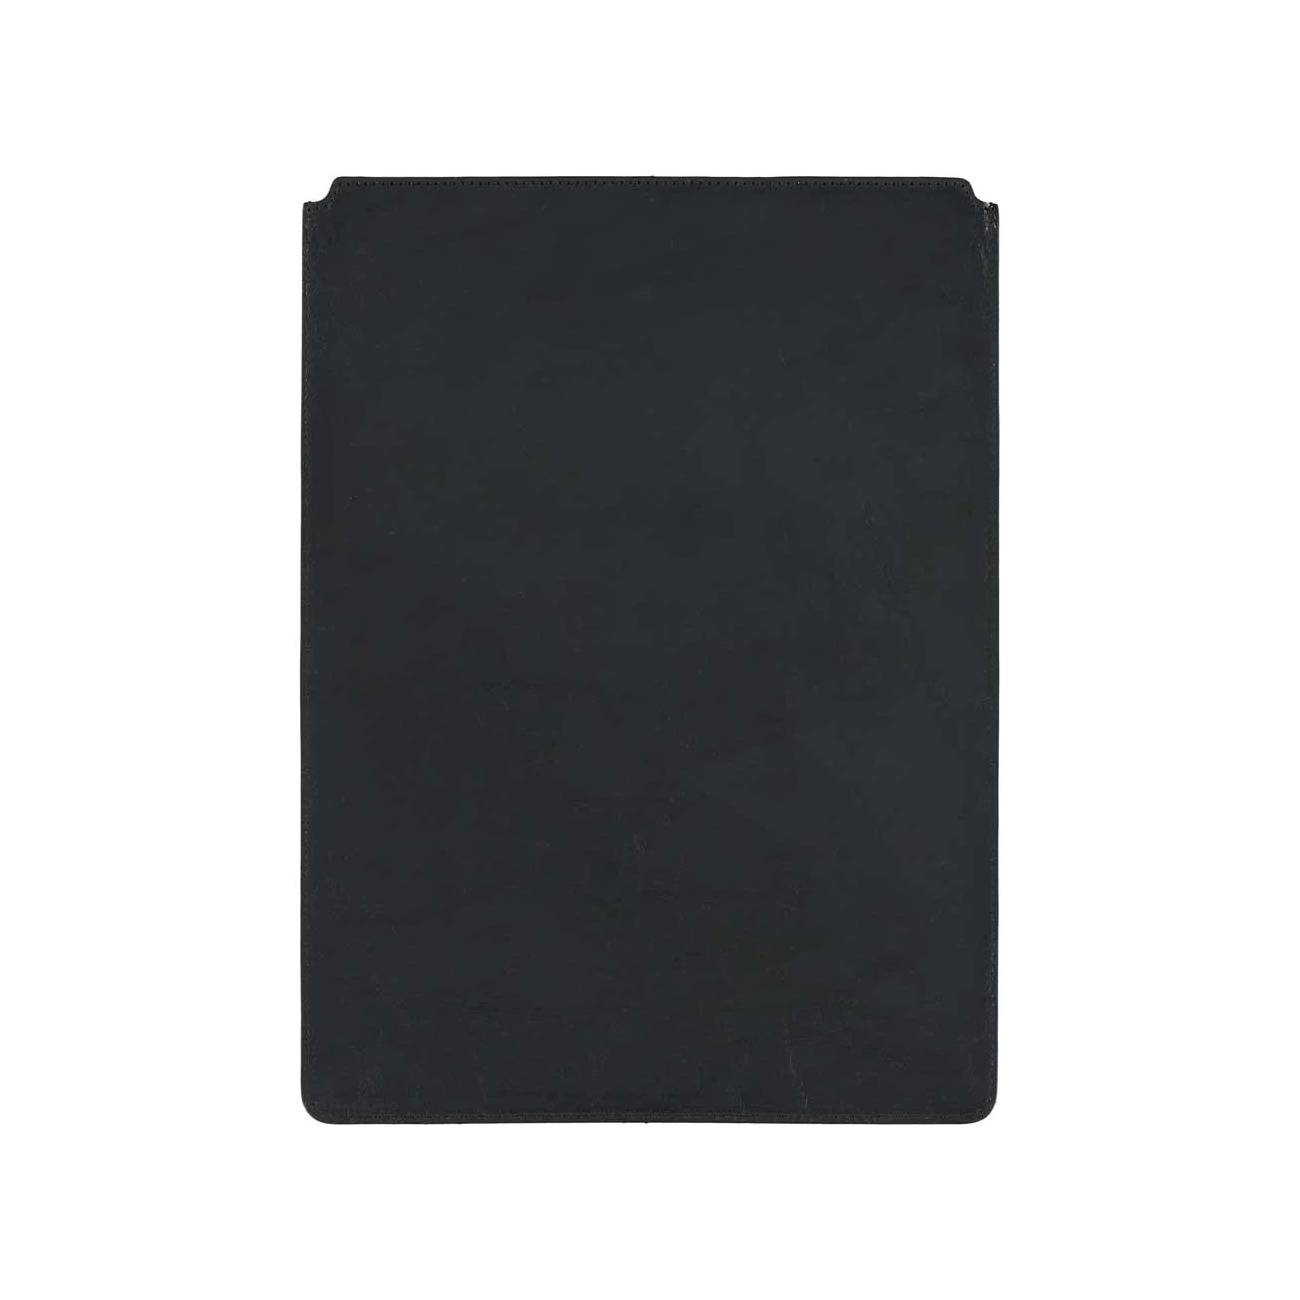 Leather MacBook Sleeve